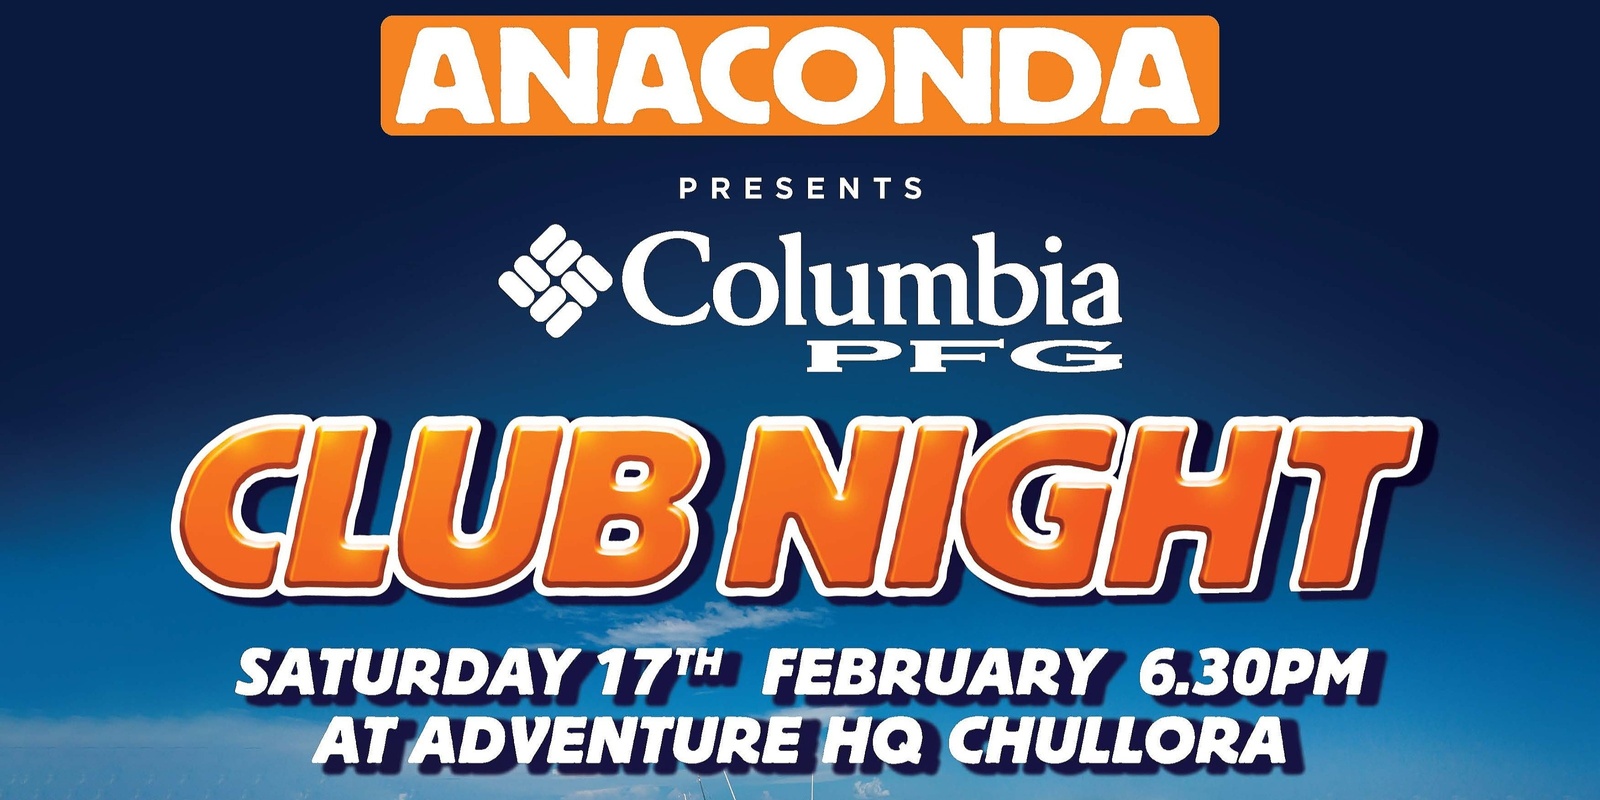 Anaconda Presents Columbia PFG Club Night